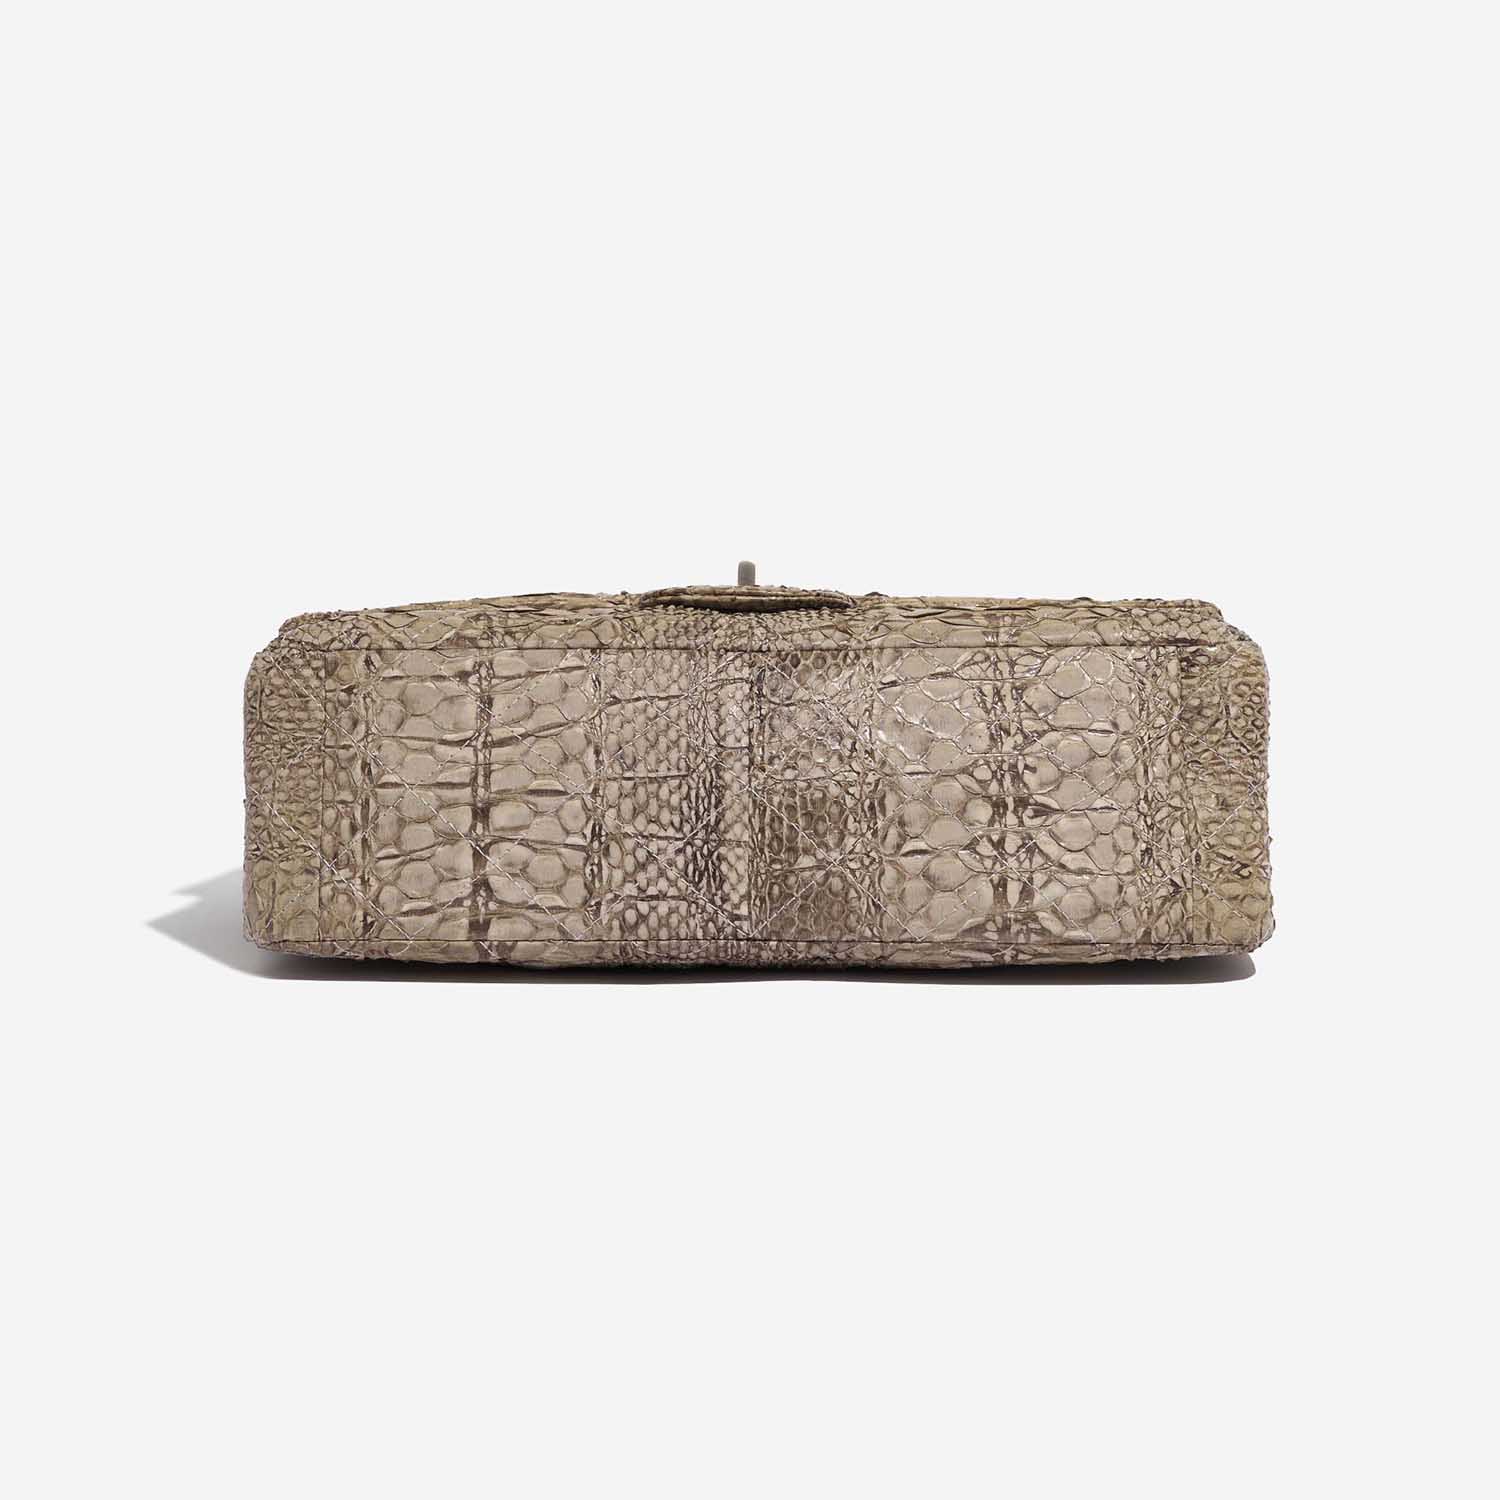 Pre-owned Chanel bag 2.55 Reissue 227 Python Natural Beige Beige Bottom | Sell your designer bag on Saclab.com